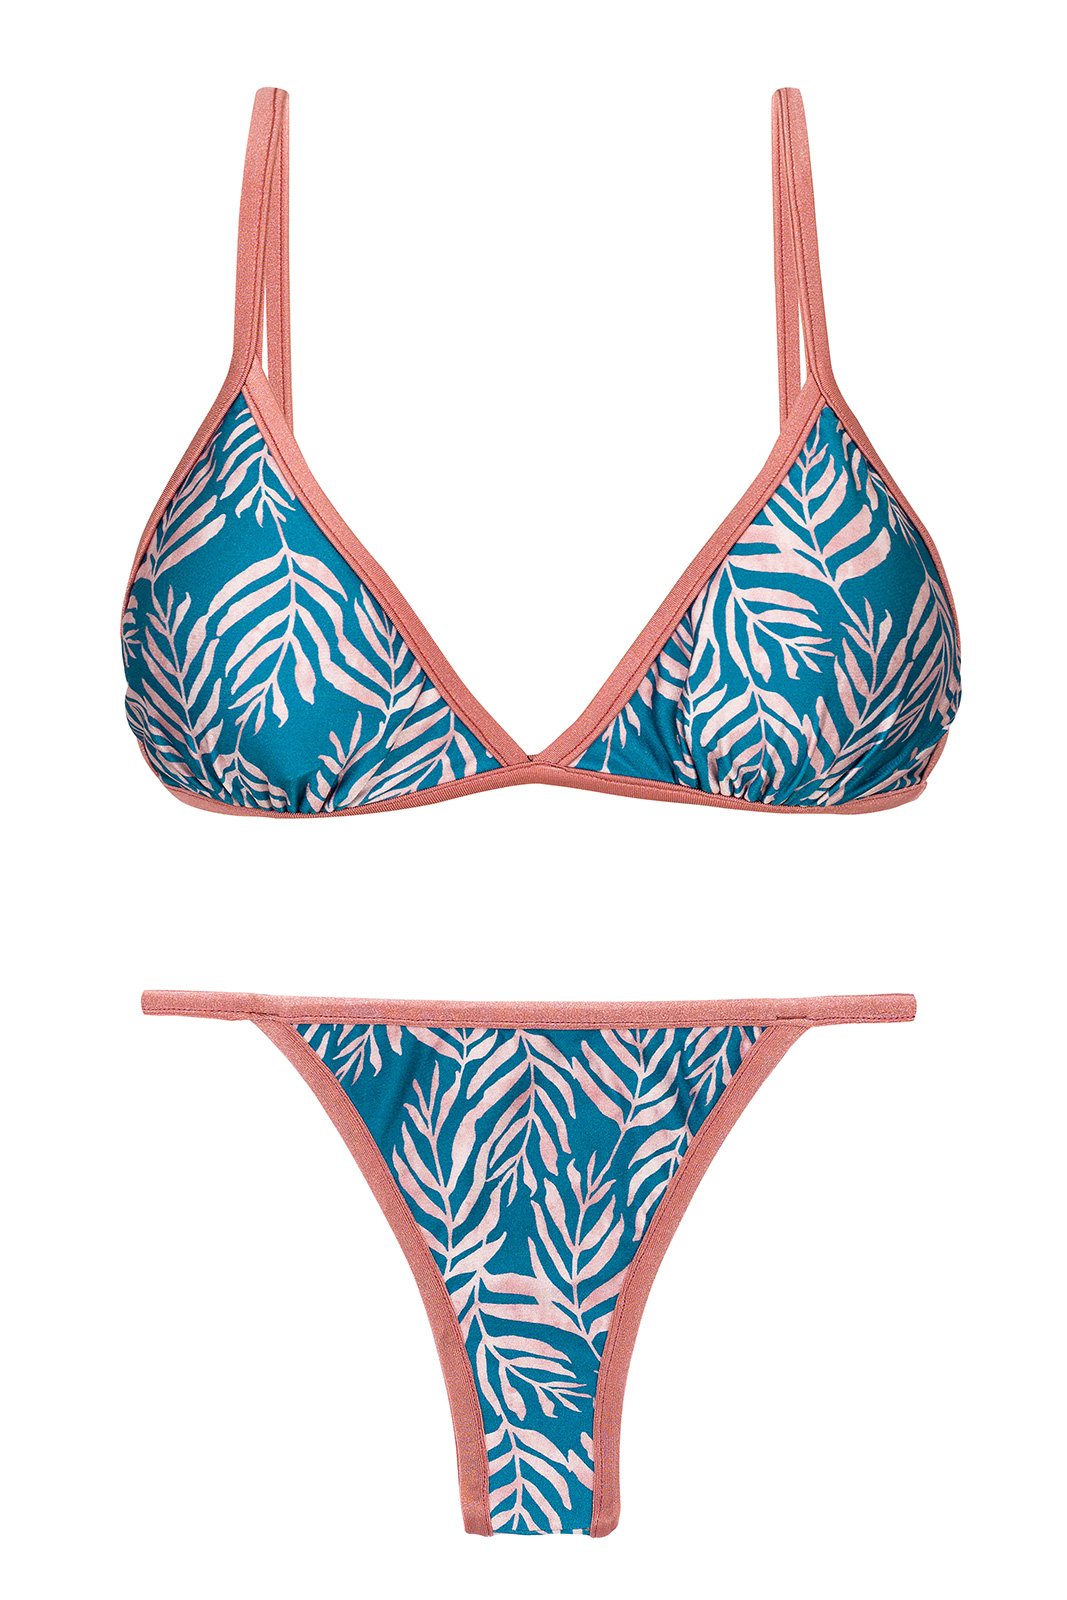 rand wandelen Bloeien Blue Brazilian Bikini With Thin Sides And Leaves Pattern - Set Palms-blue  Tri-fixo California - Rio de Sol